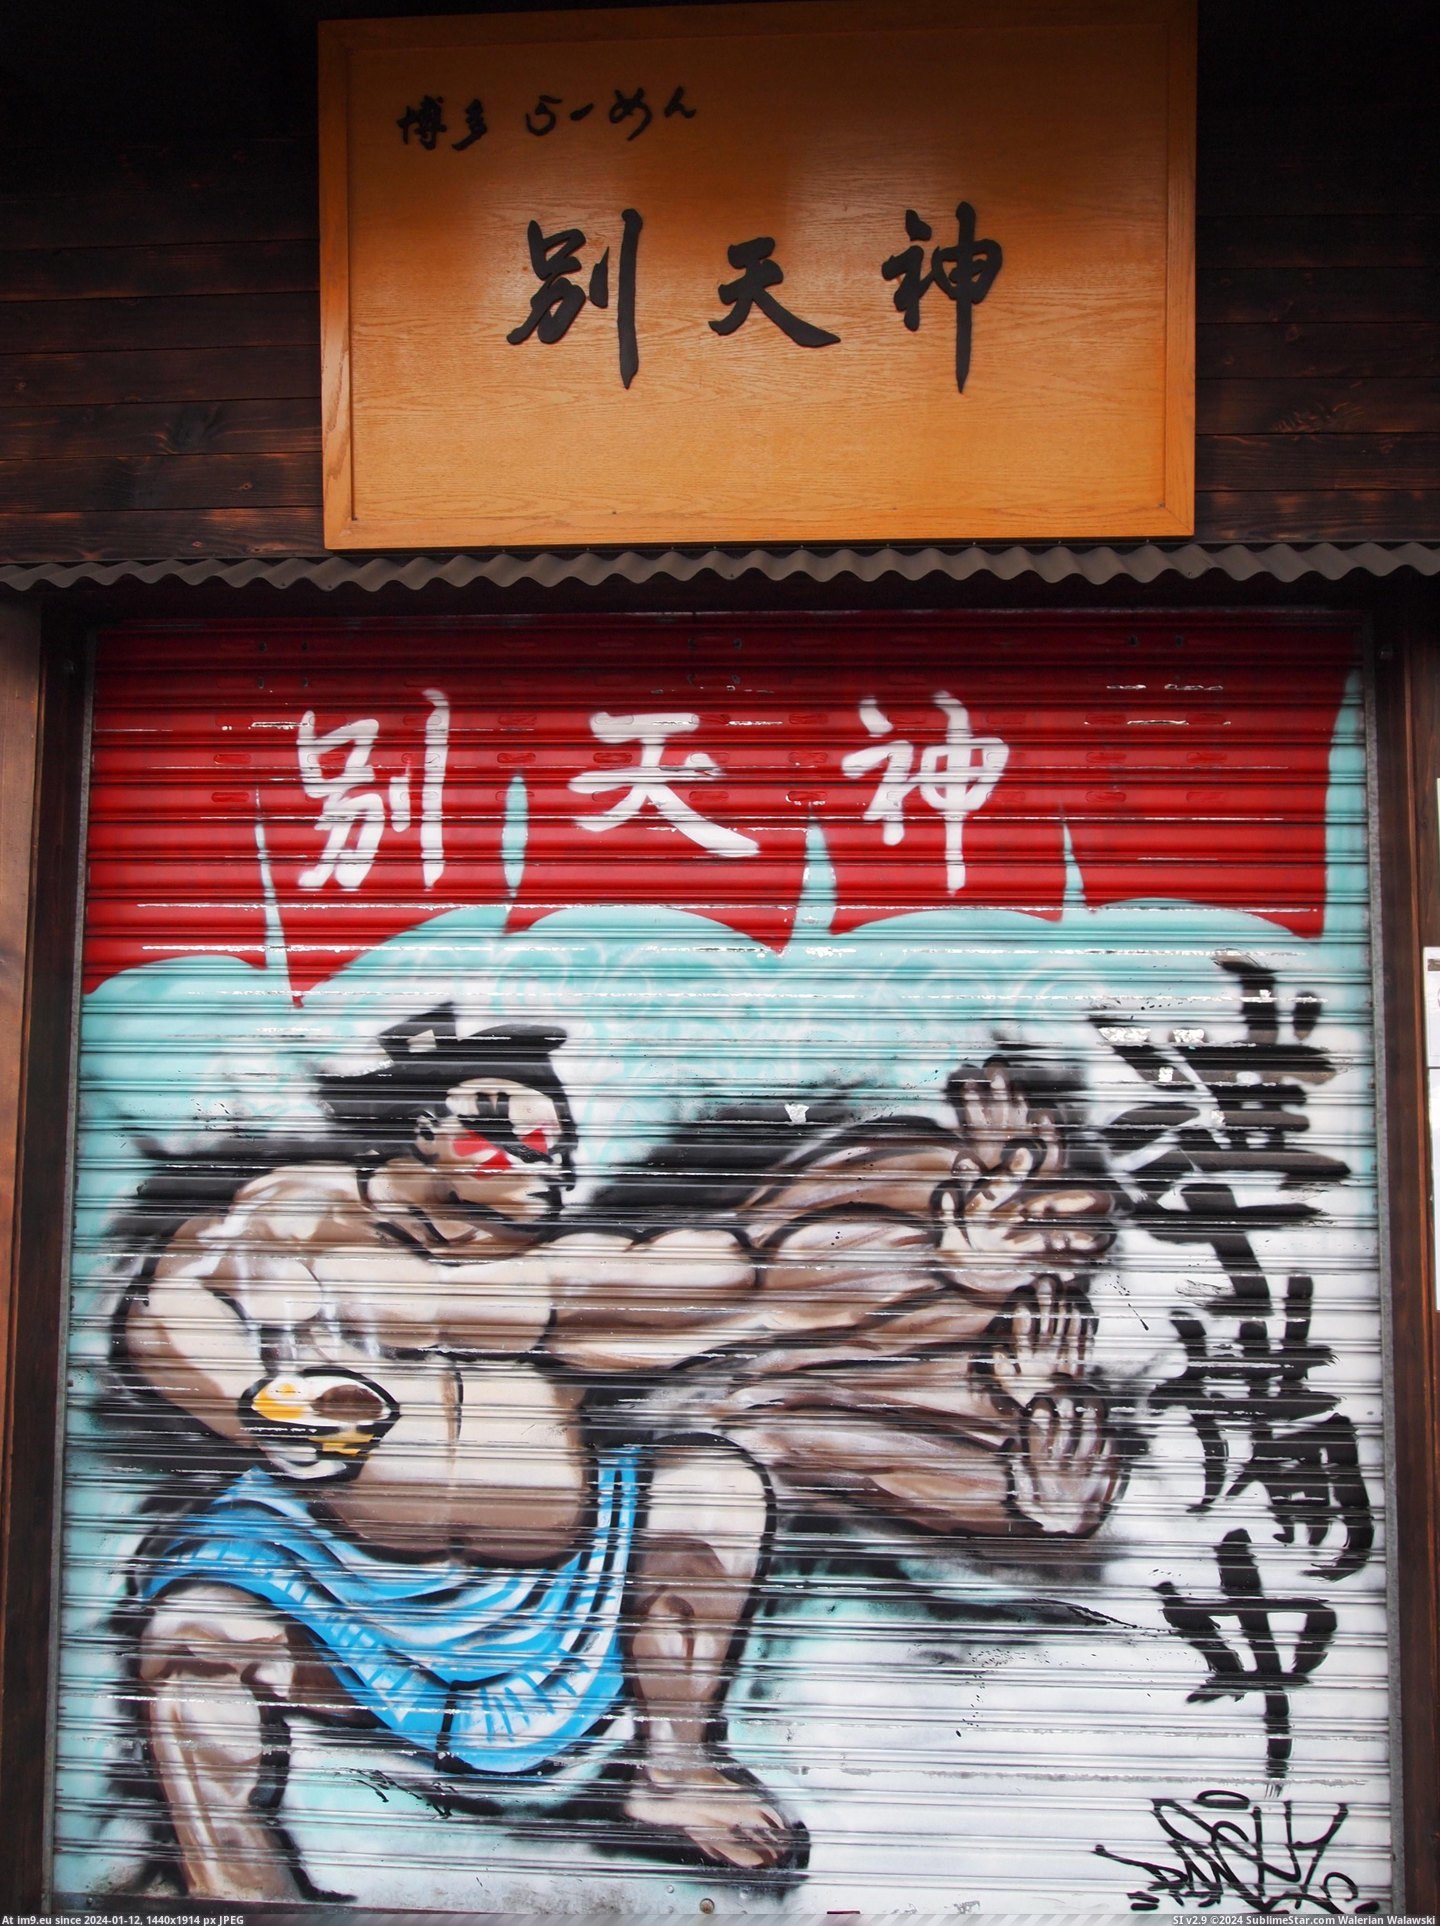 #Gaming #Art #Fighter #Hong #Kong #Street #Graffiti [Gaming] Street Fighter graffiti art in Hong Kong Pic. (Image of album My r/GAMING favs))